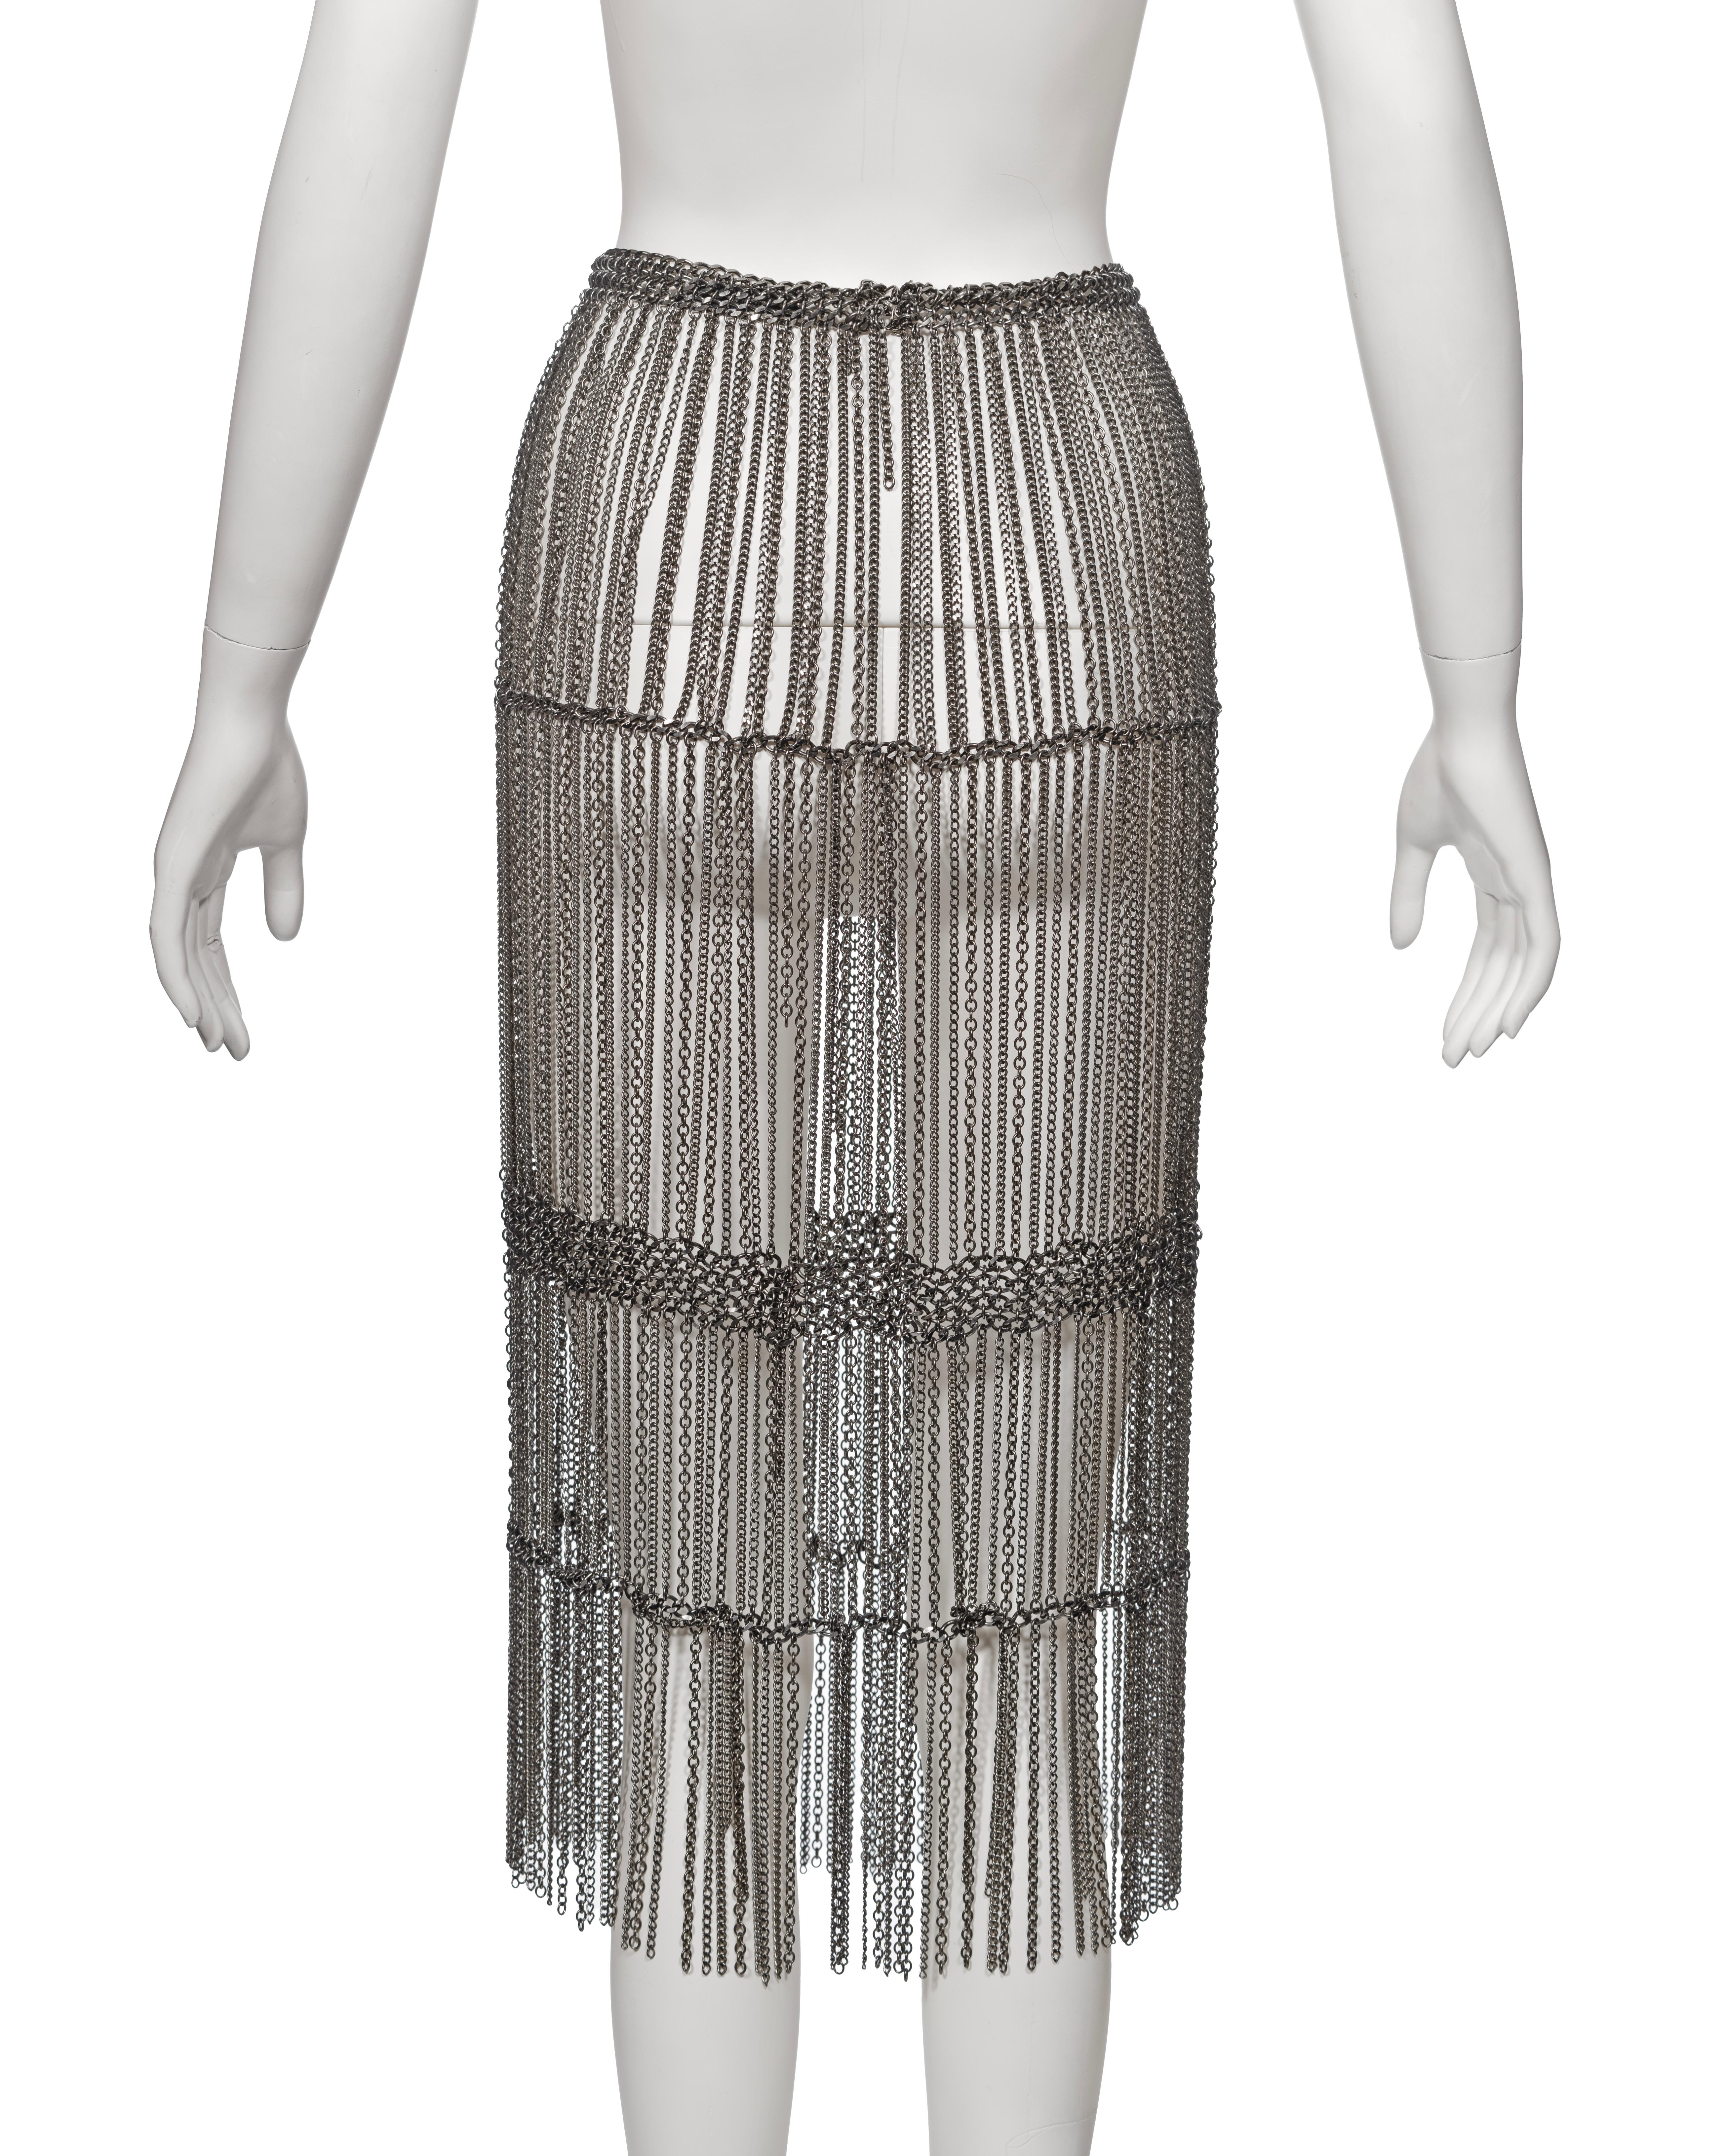 Prada by Miuccia Prada Silver Metal Chain Fringed Evening Skirt, fw 2002 For Sale 7